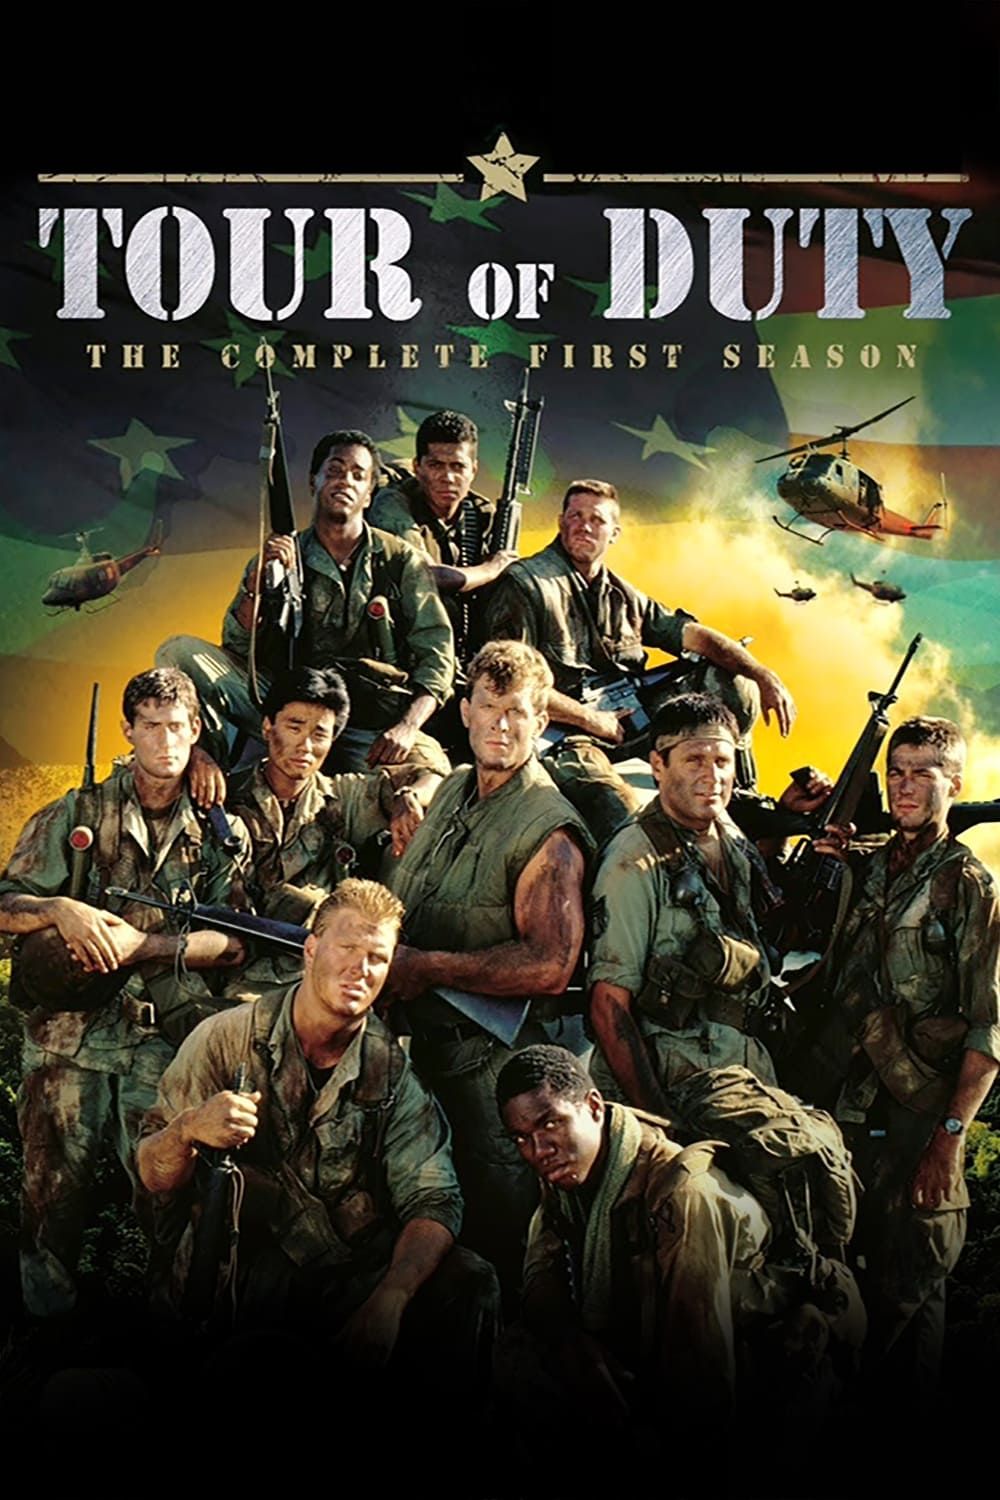 tour of duty reunion movie